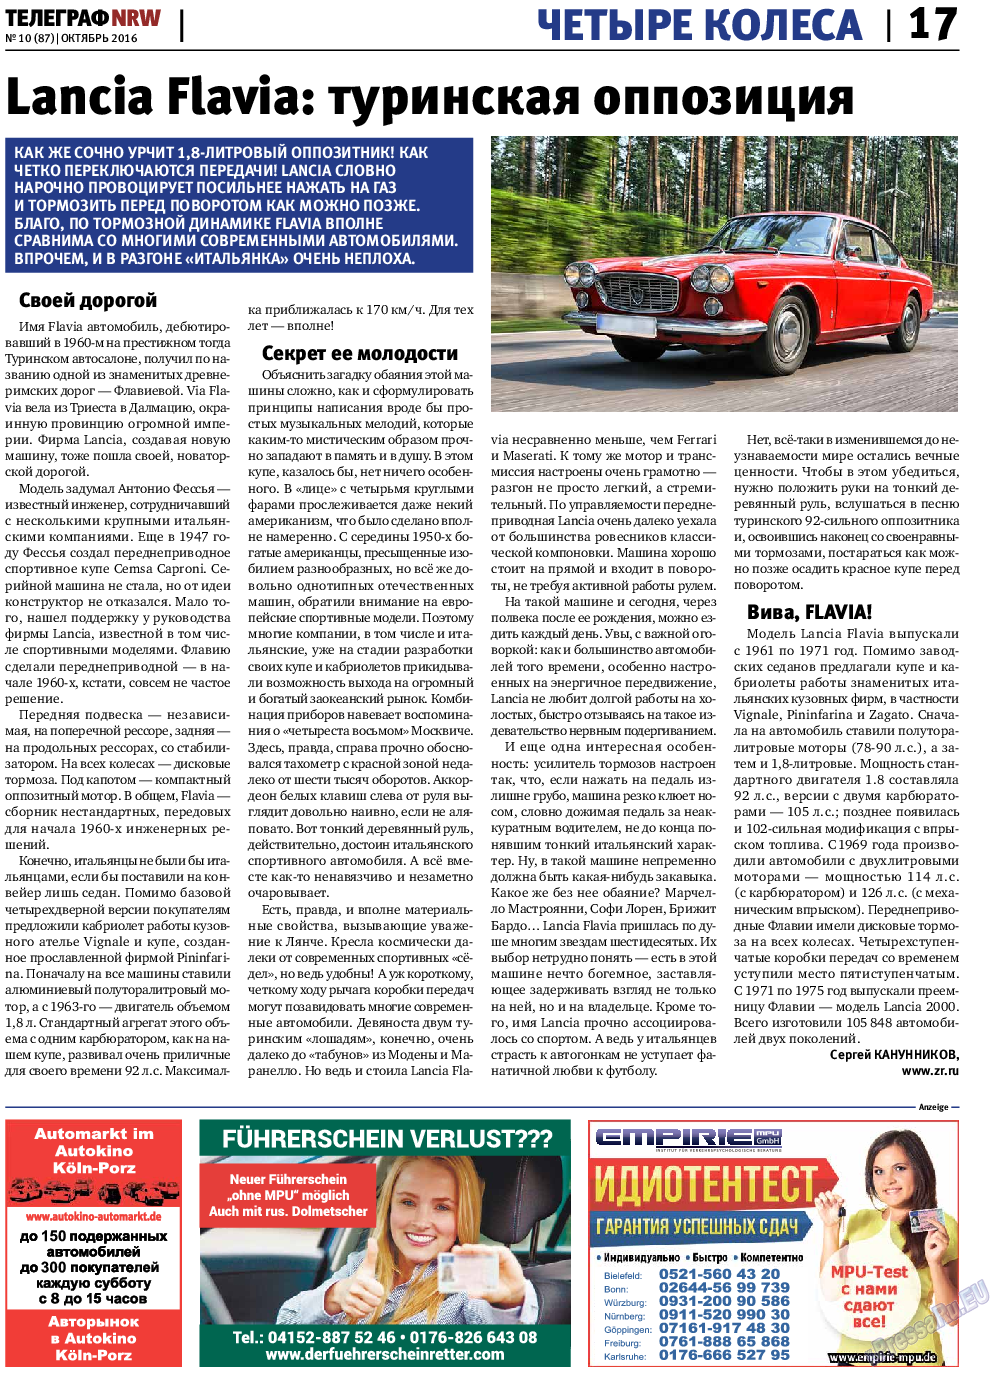 Телеграф NRW, газета. 2016 №10 стр.17